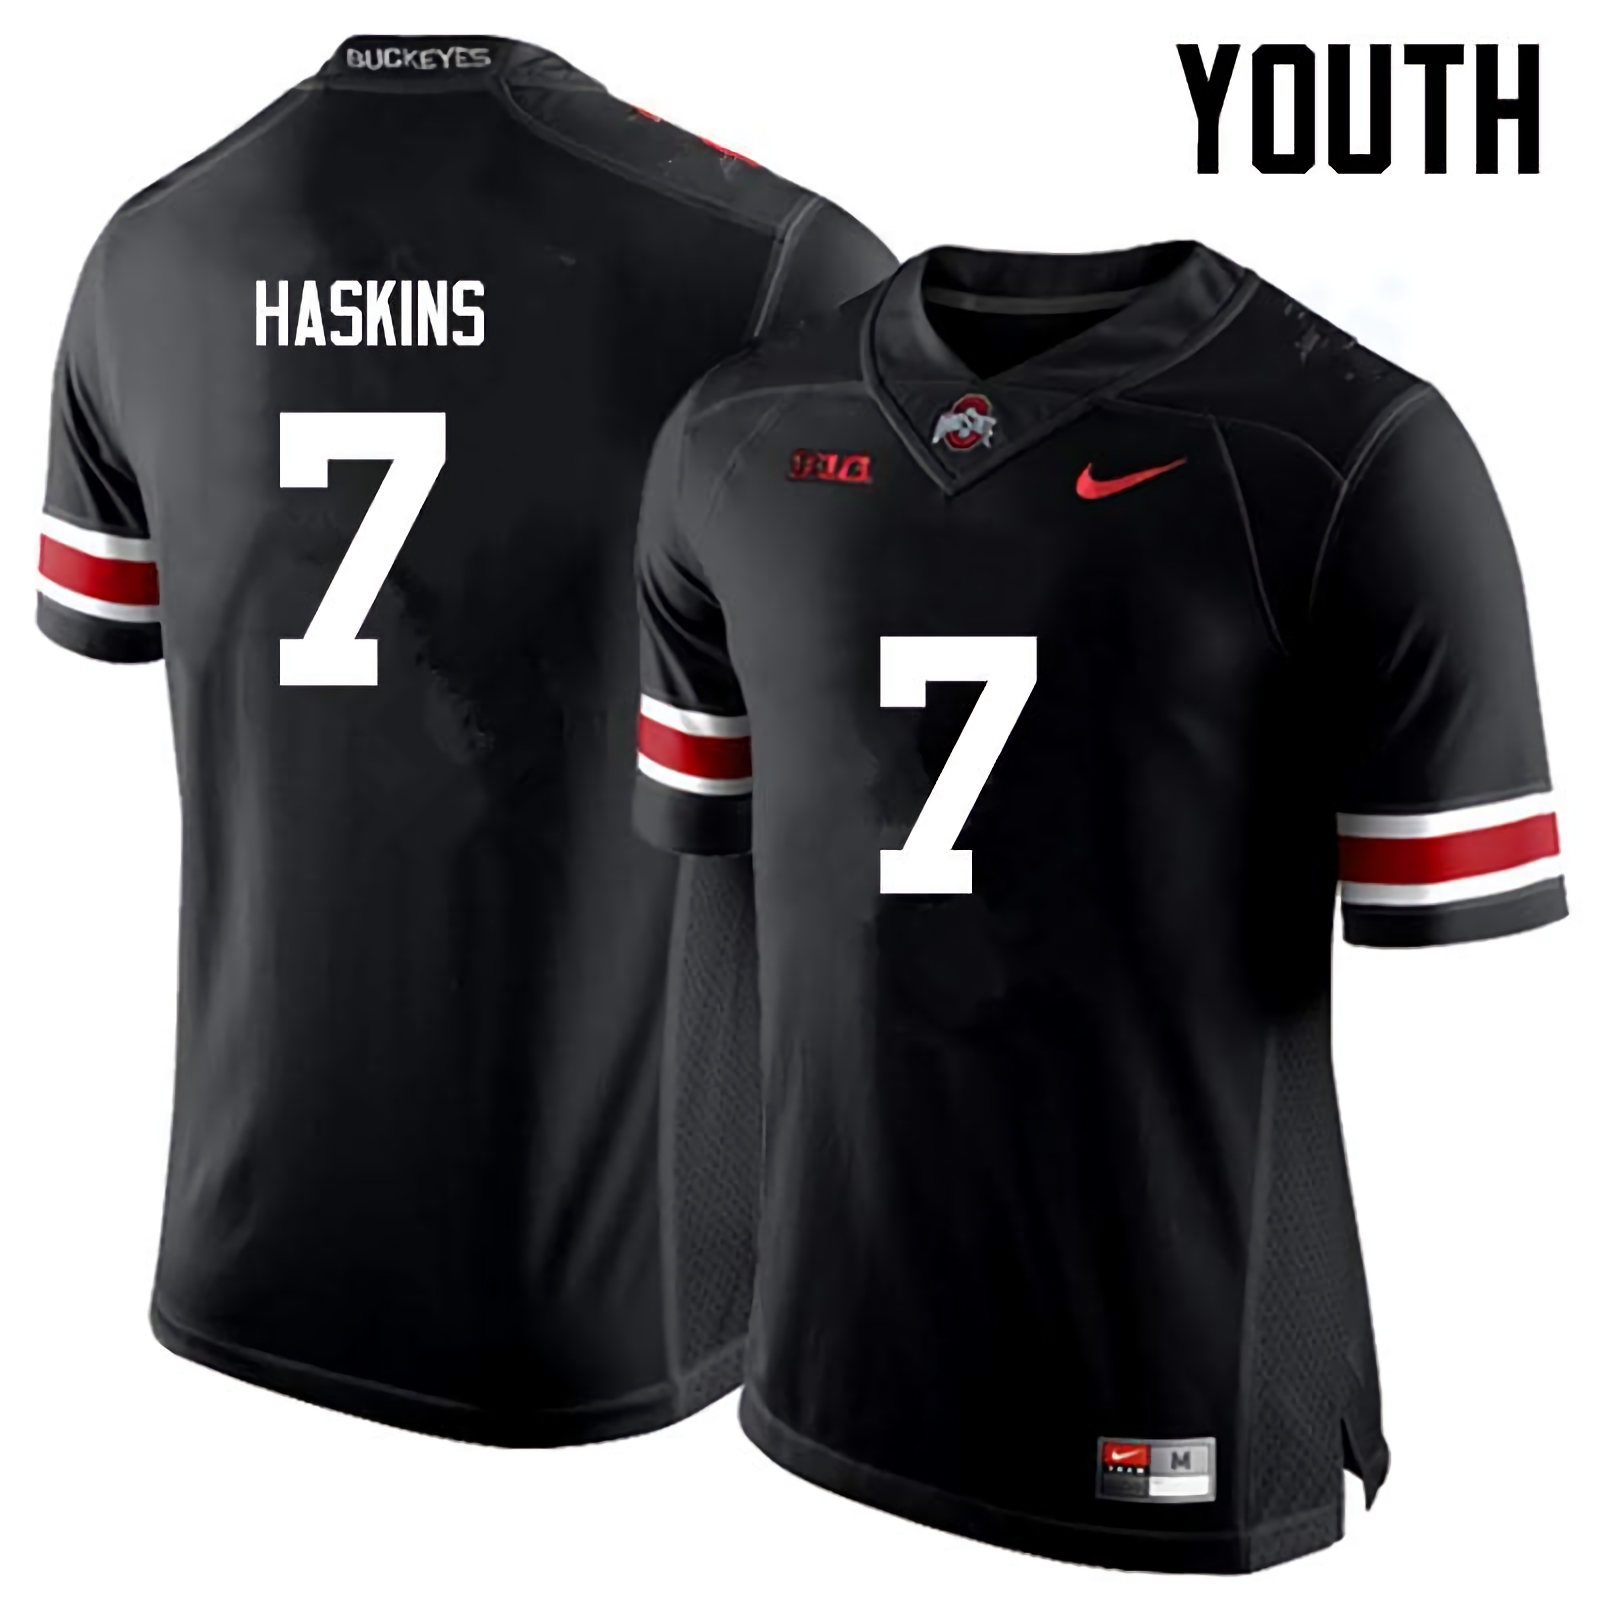 Dwayne Haskins Ohio State Buckeyes Youth NCAA #7 Nike Black College Stitched Football Jersey VPK6856GX